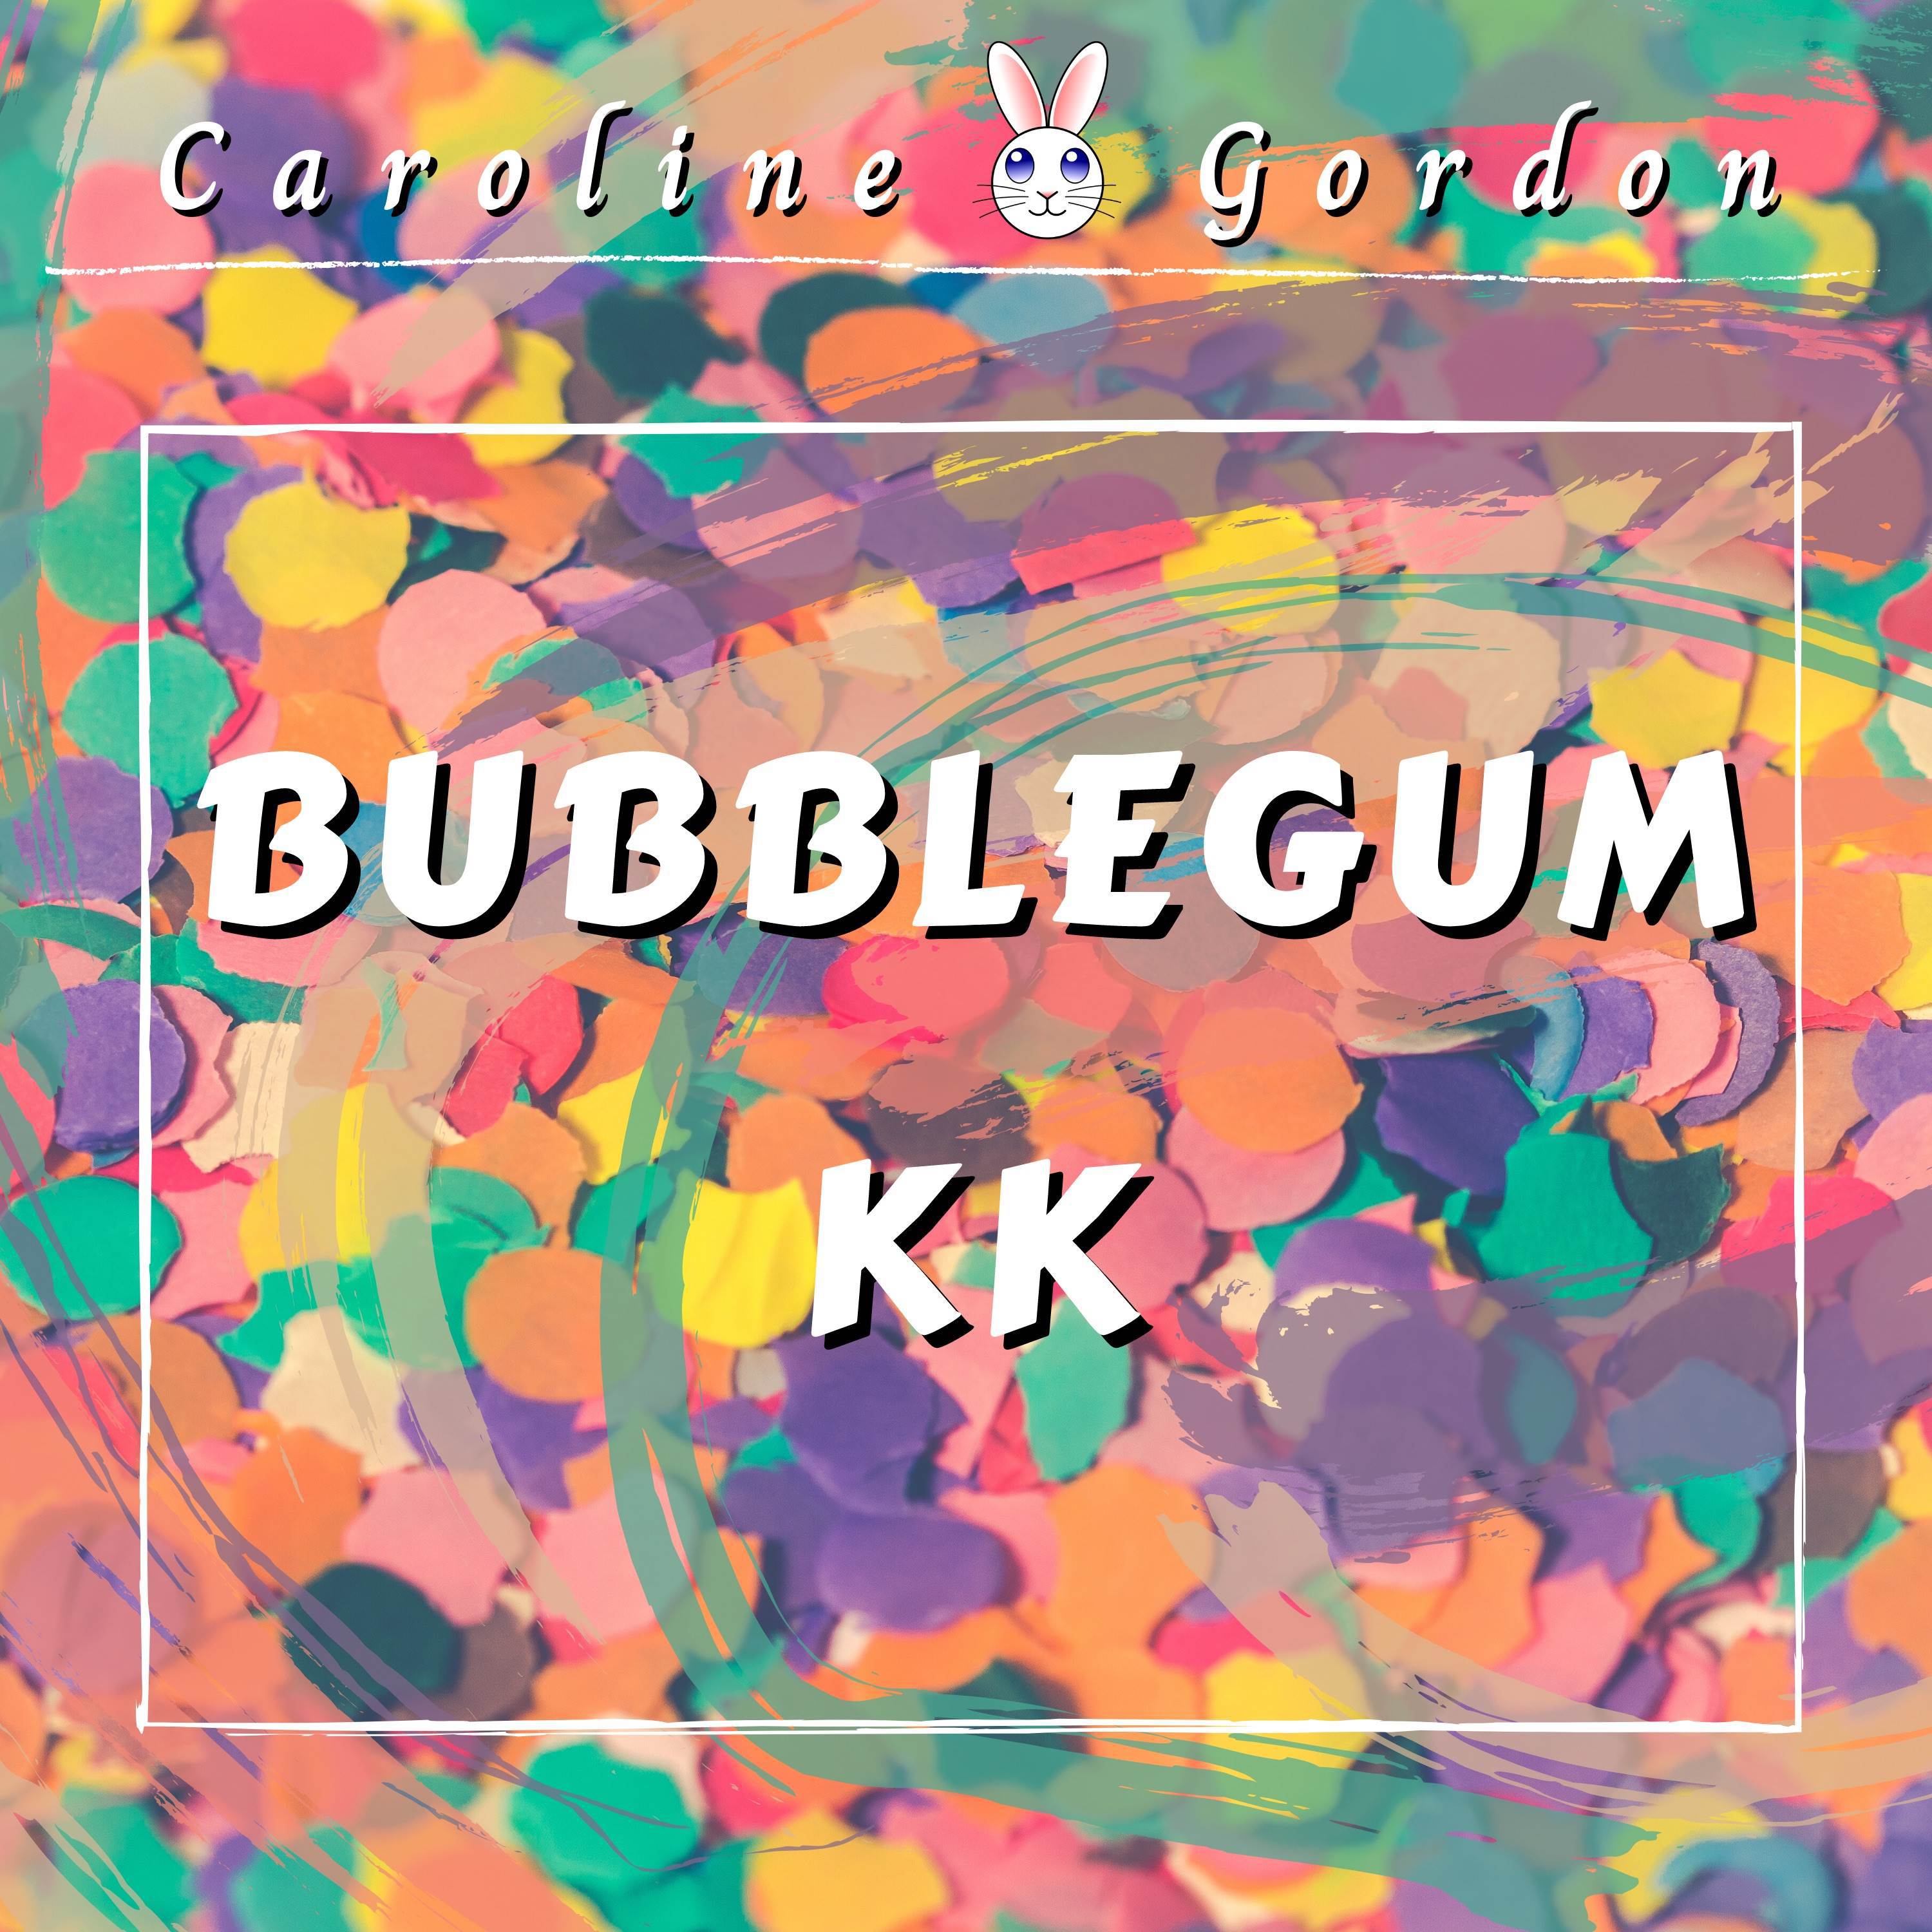 Bubblegum K.K. - Caroline Gordon - 专 辑 - 网 易 云 音 乐